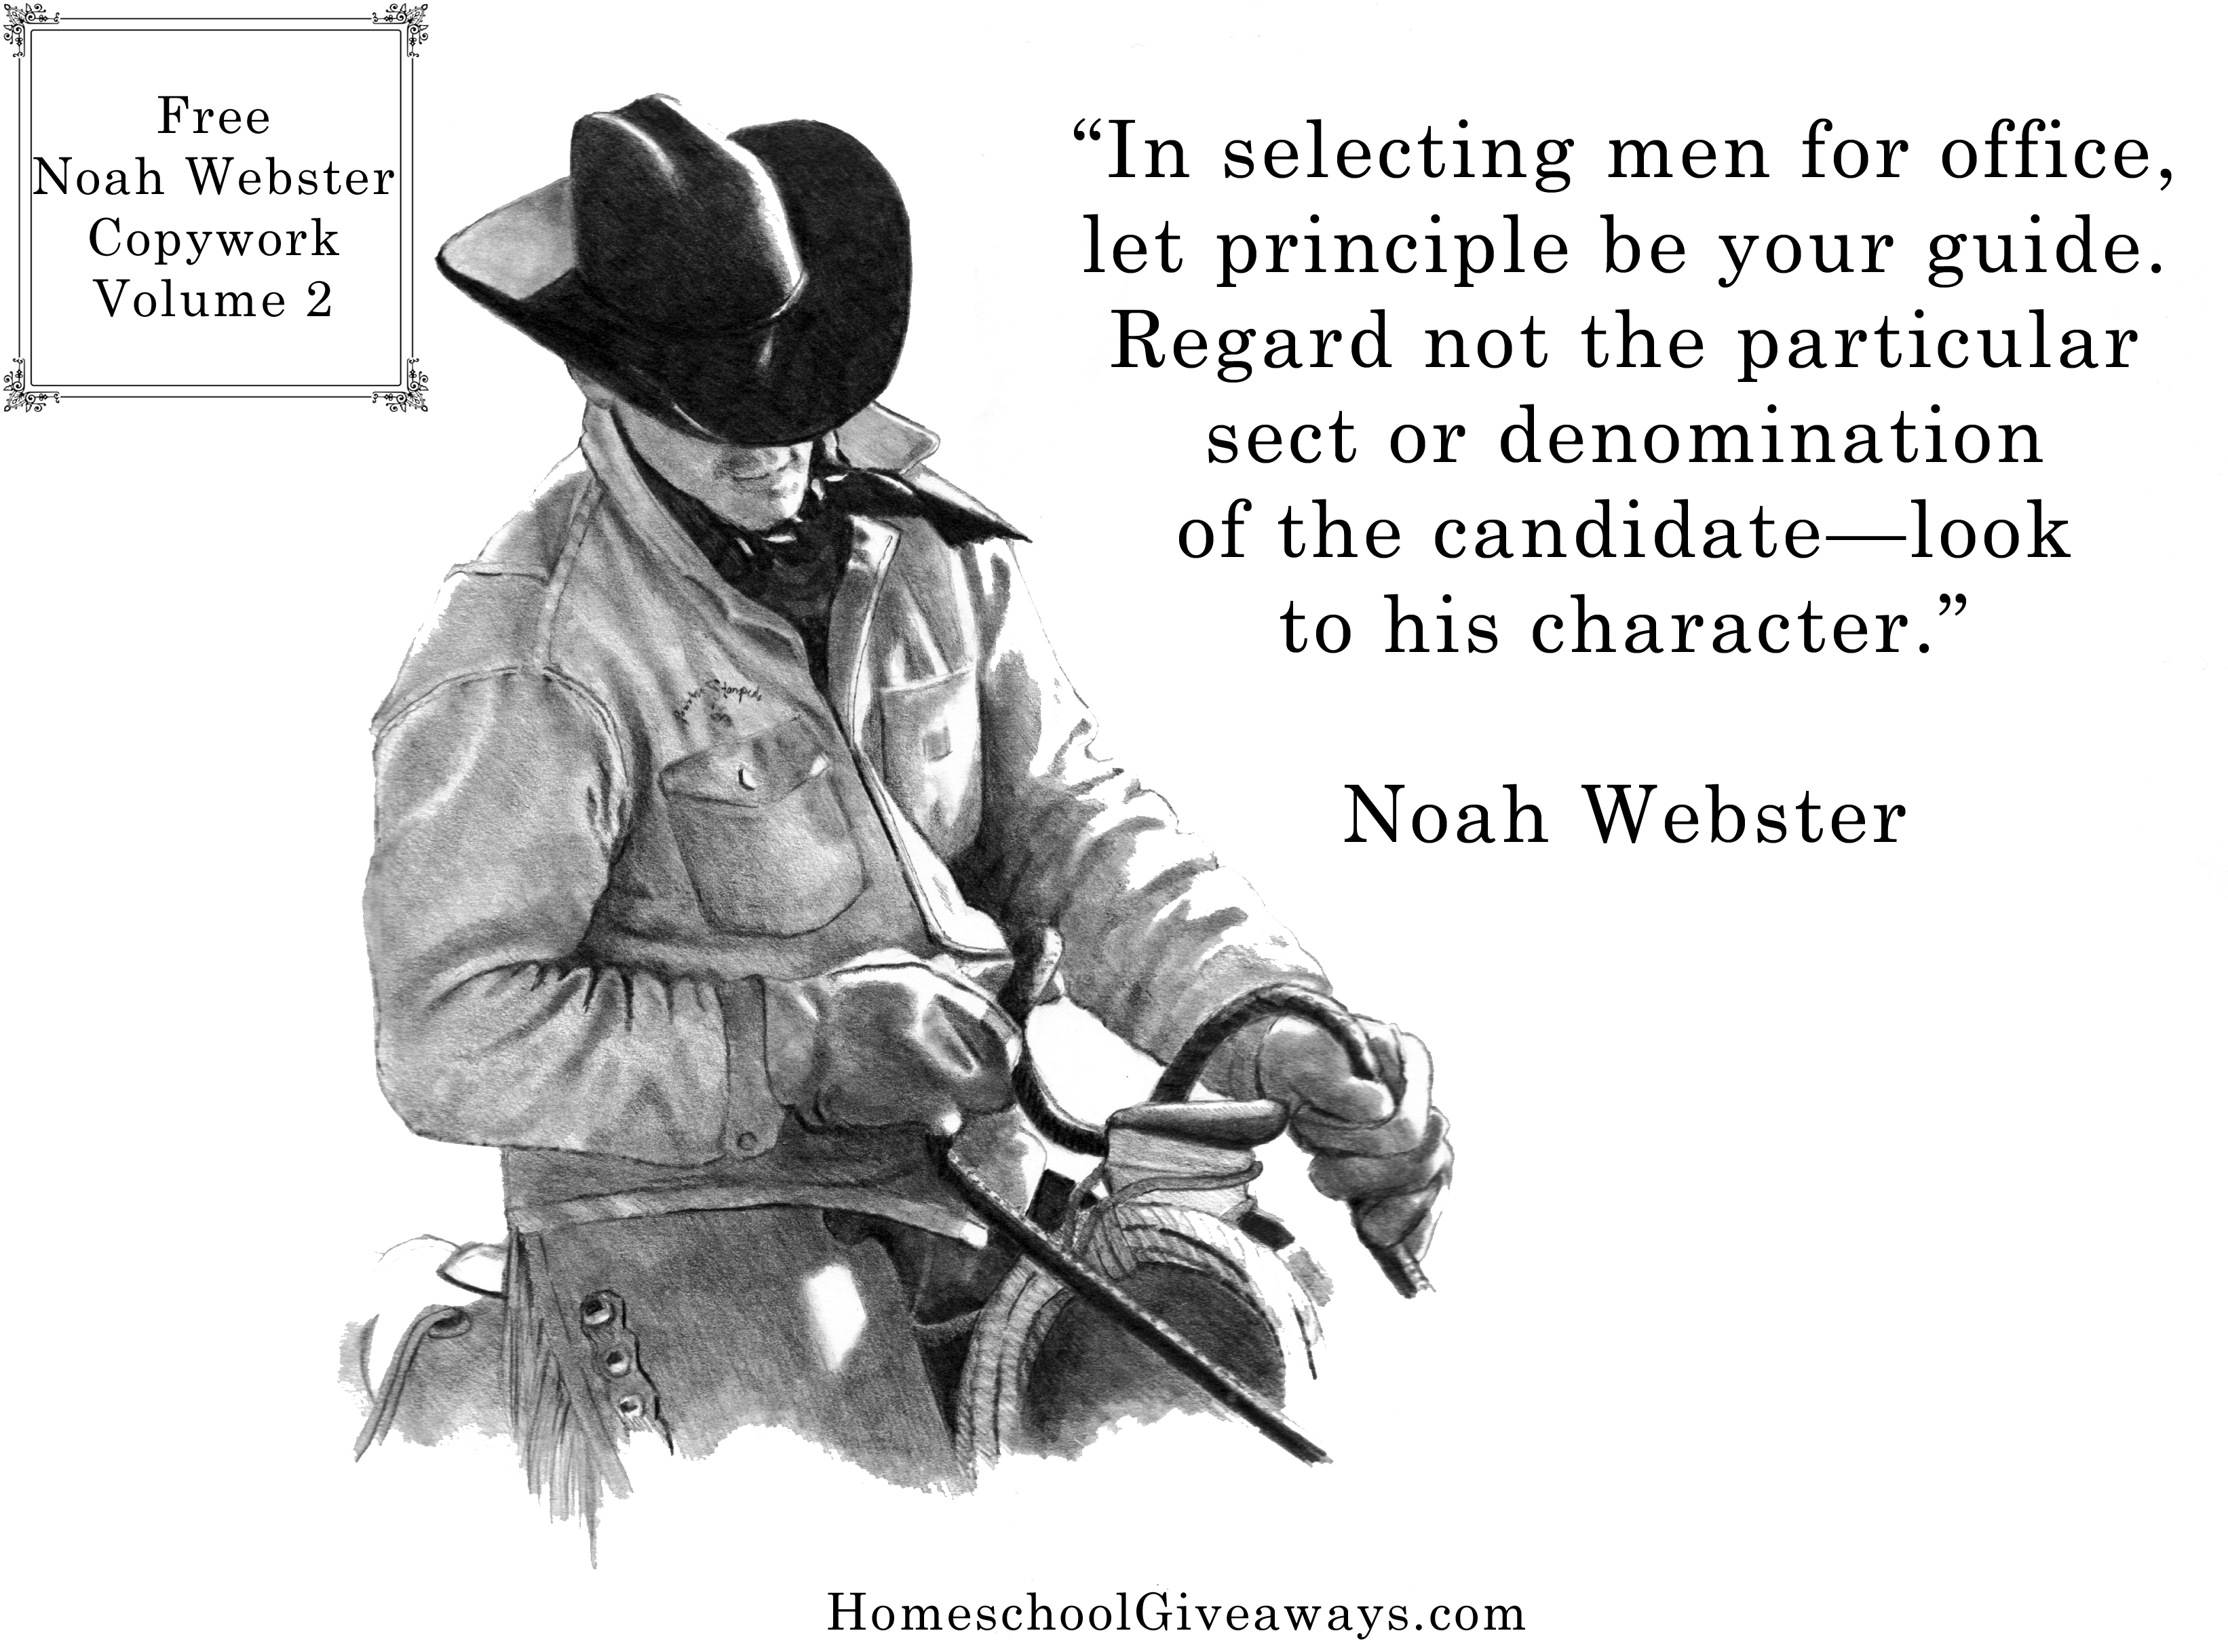 FREE Noah Webster Copywork